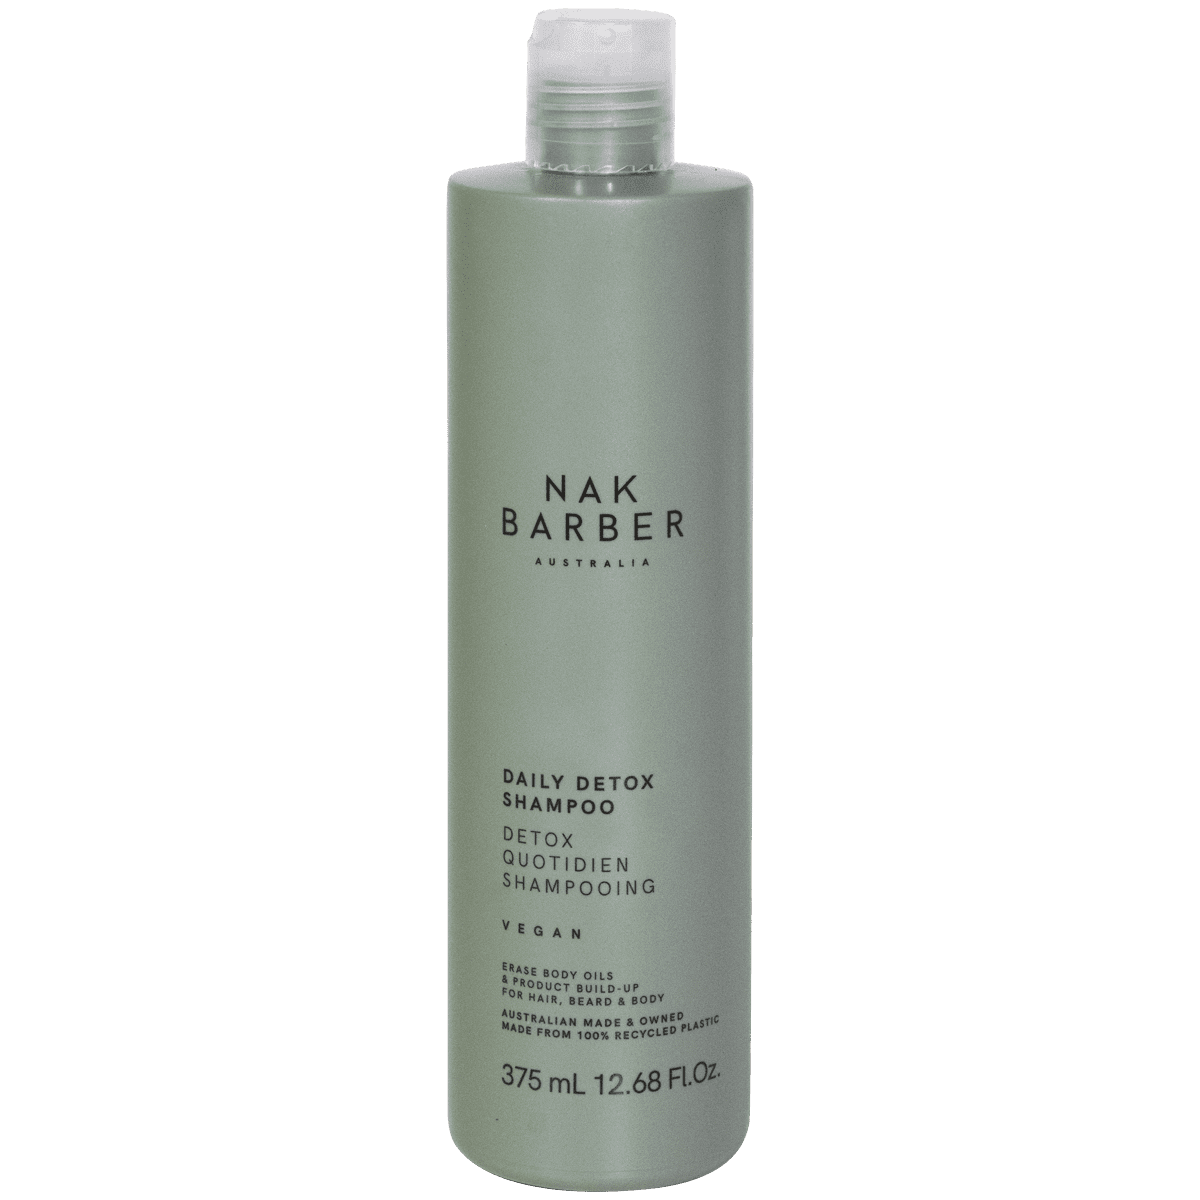 Nak Barber Daily Detox Shampoo 375ml